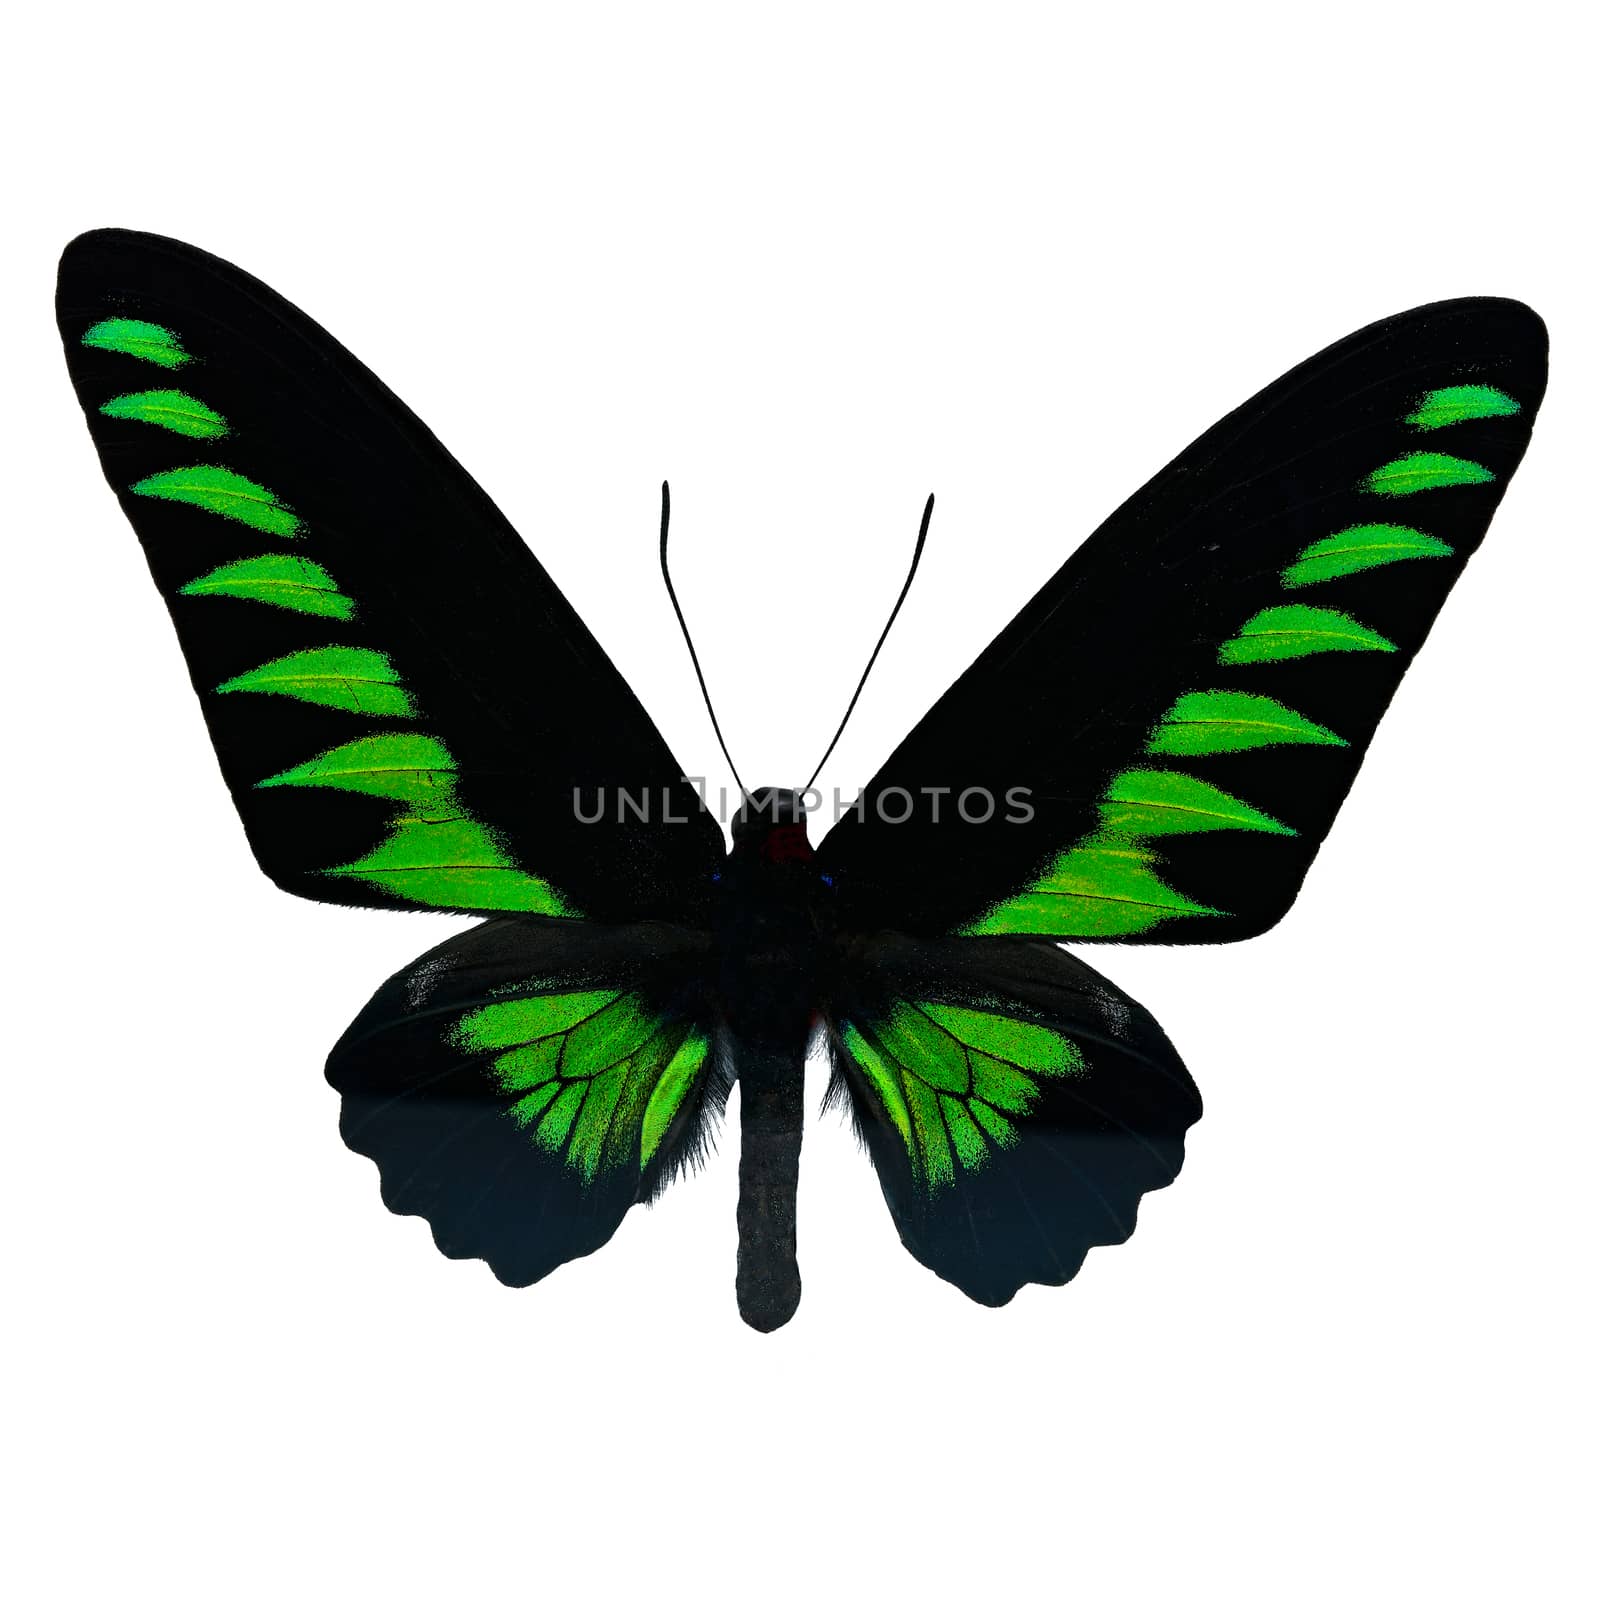 Butterfly of Malaysia, green and black butterfly, male Rajah Brooke's Birdwing, Rajah Brookiana (Trogonoptera brookiana), upper wing profile